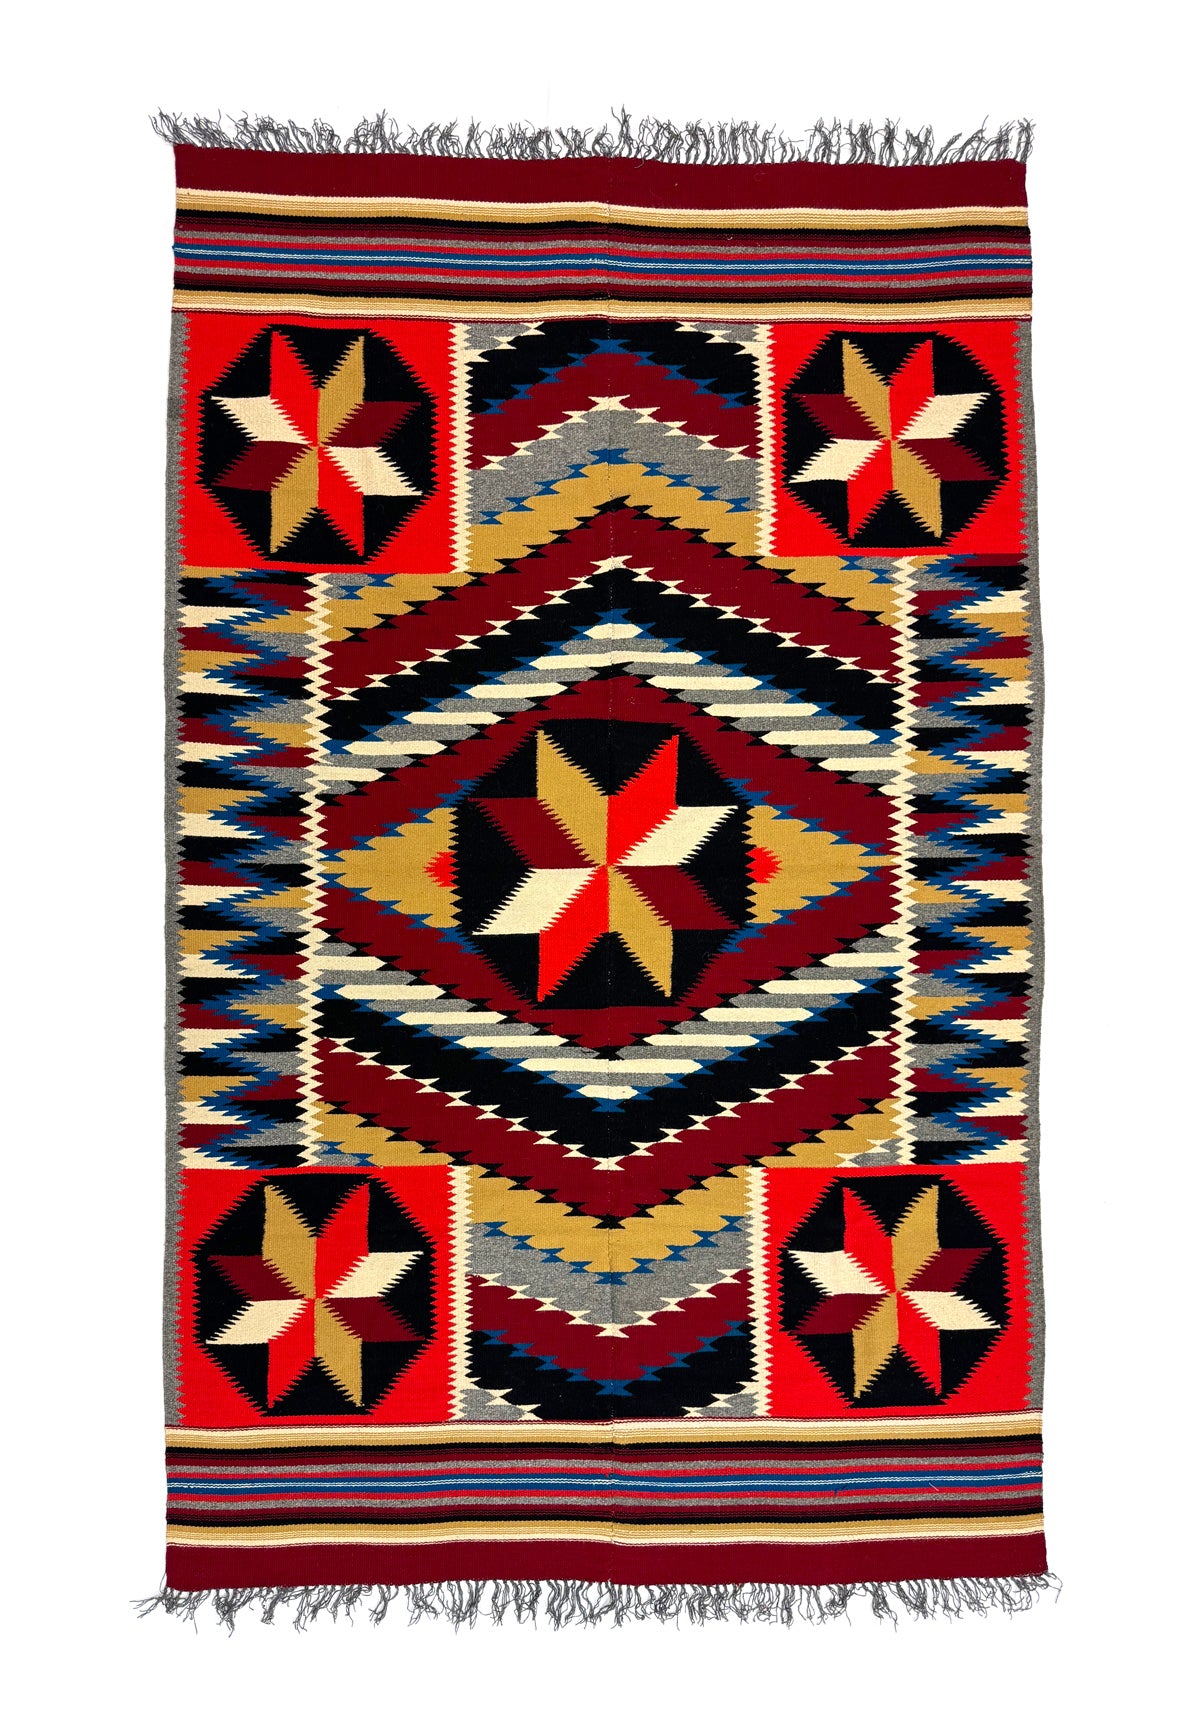 Rio Grande Blanket with Valero Stars c. 1920-30s, 82.5" x 52.5" (T92253-1123-007)